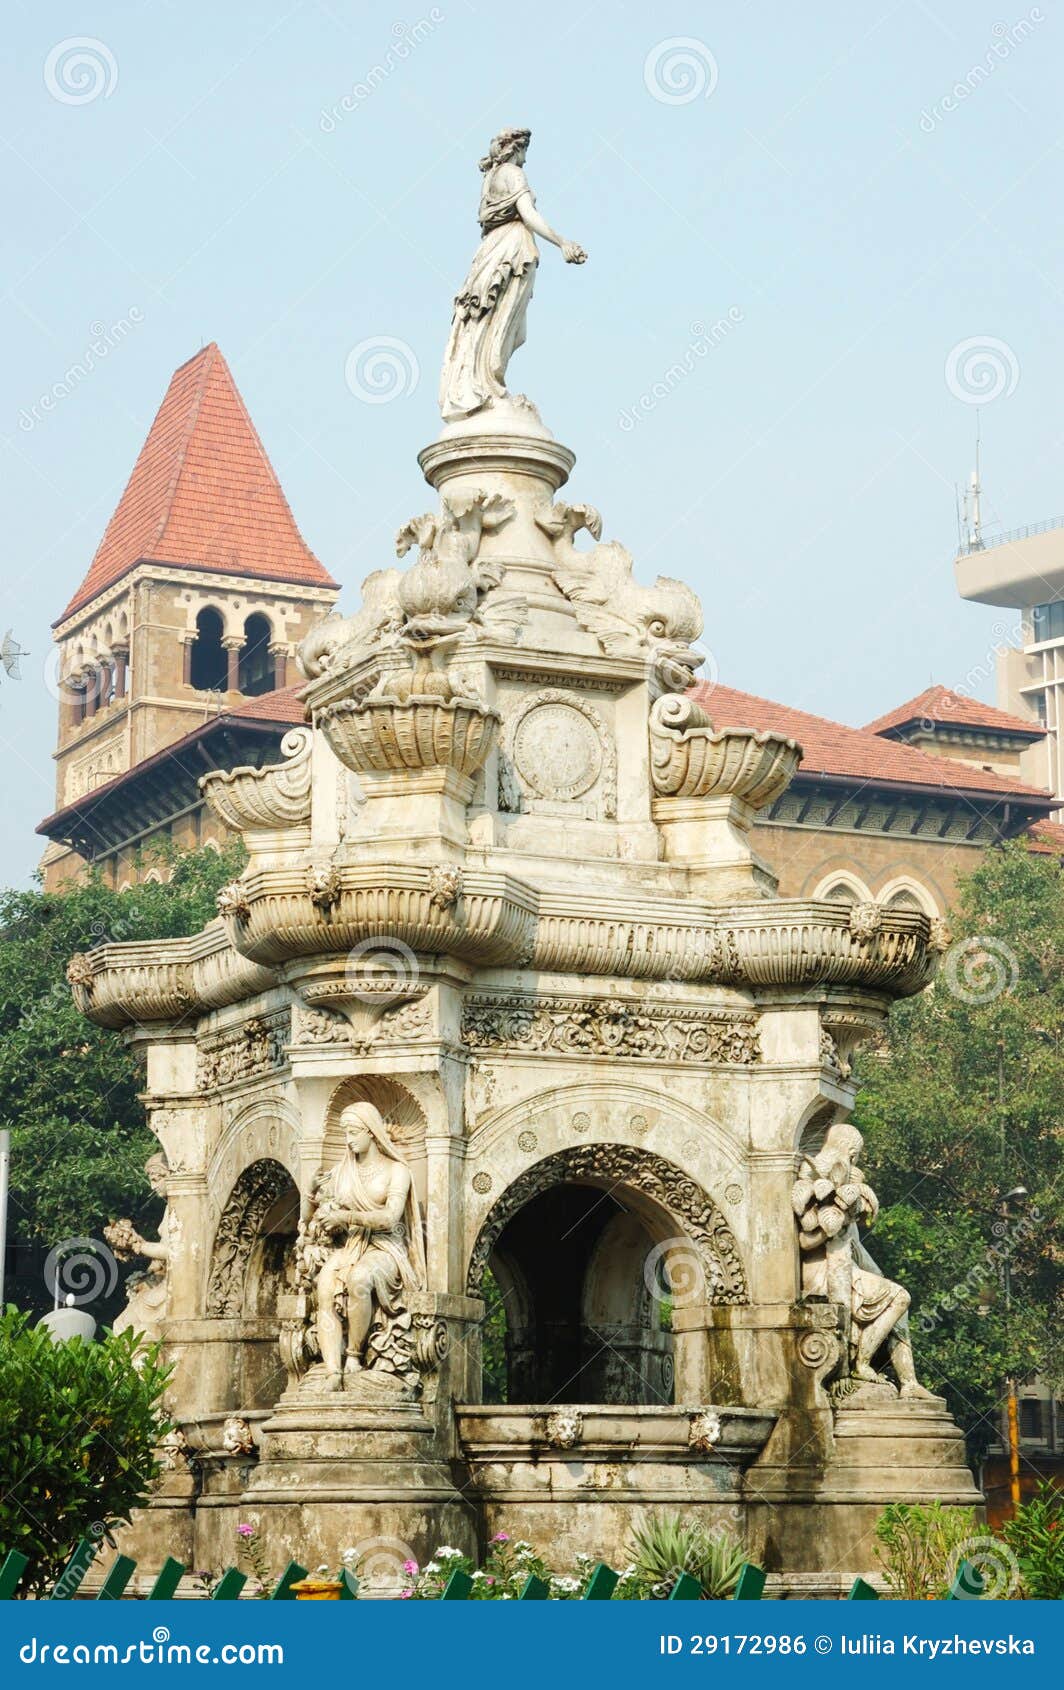 famous landmark of mumbai (bombay) - flora fountain,india